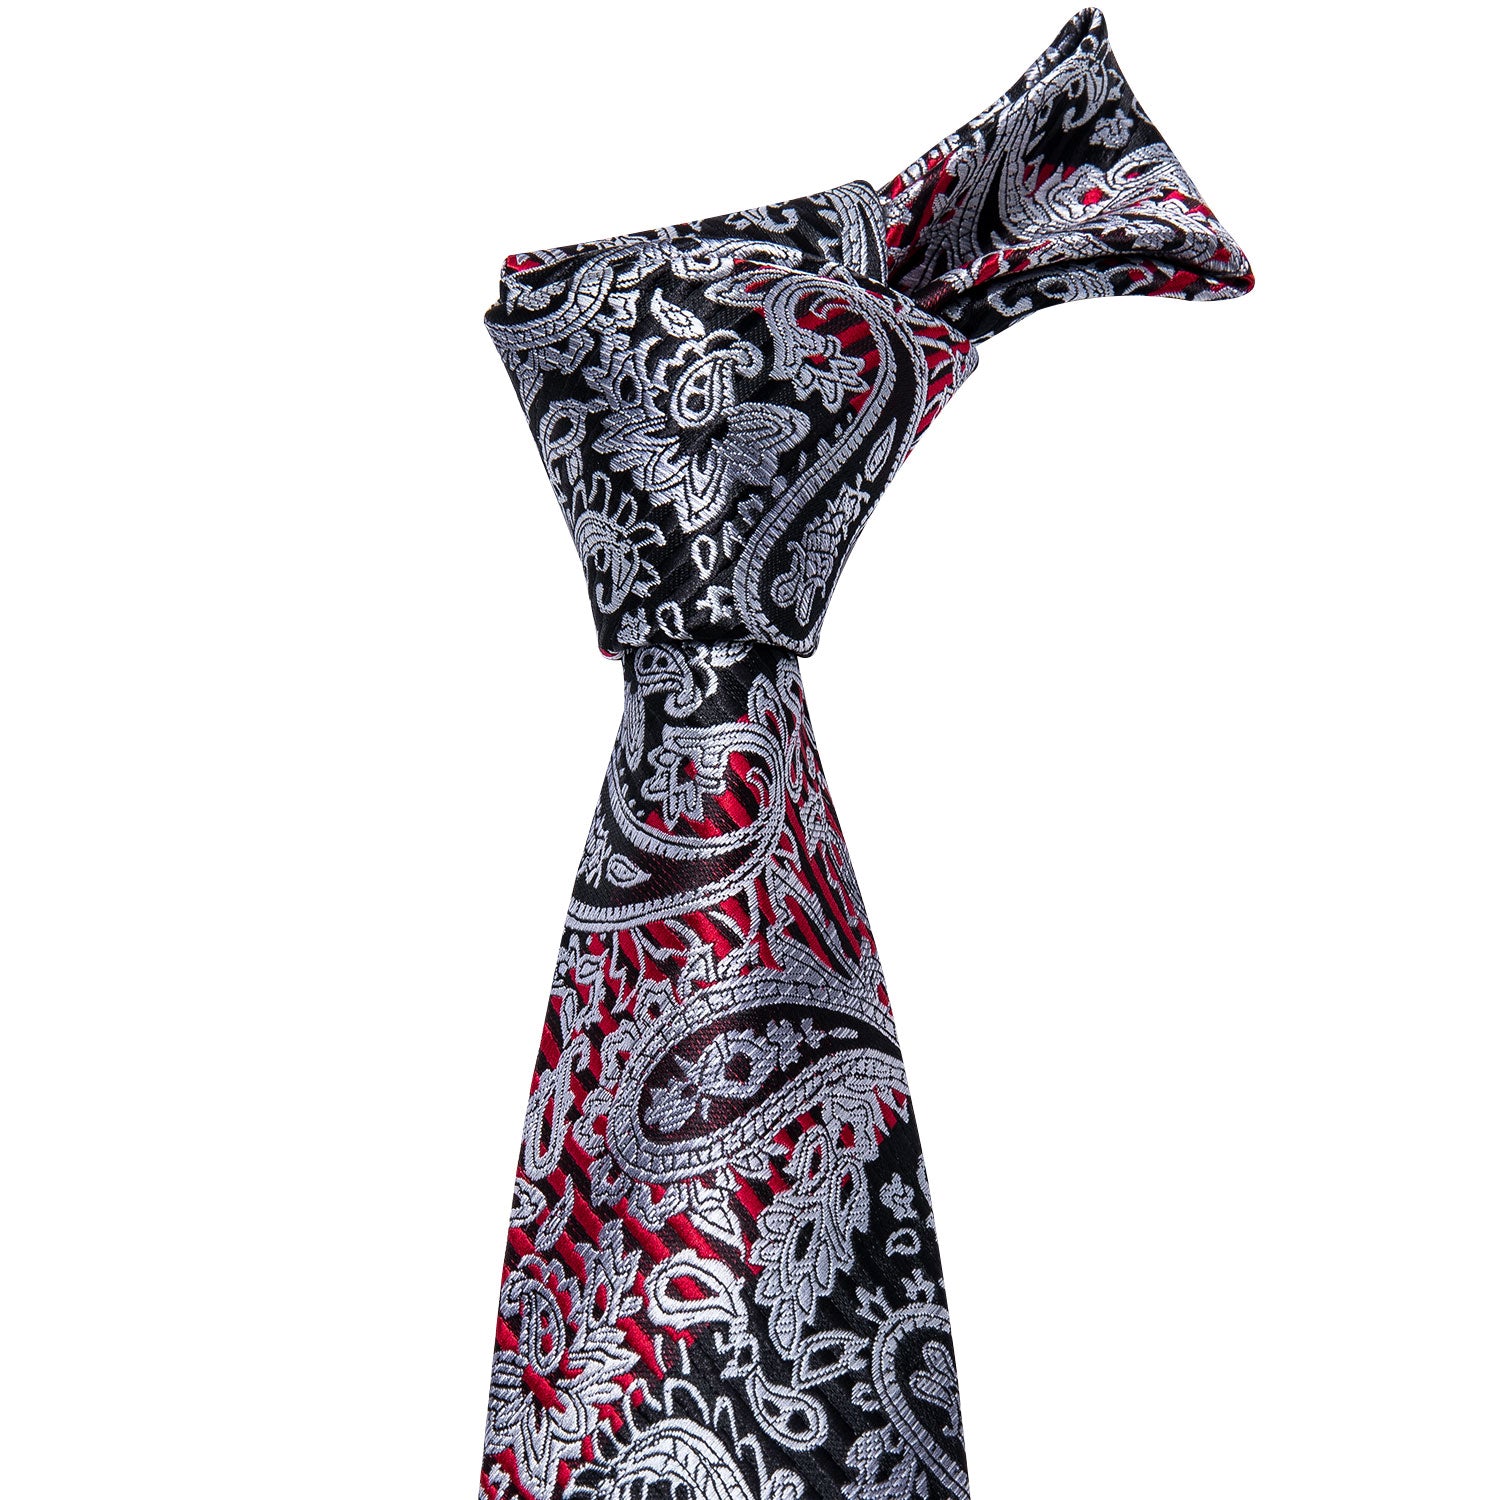 Barry.wang Black Tie Silver Red Line Paisley Silk Men's Tie Pocket Square Cufflinks Set